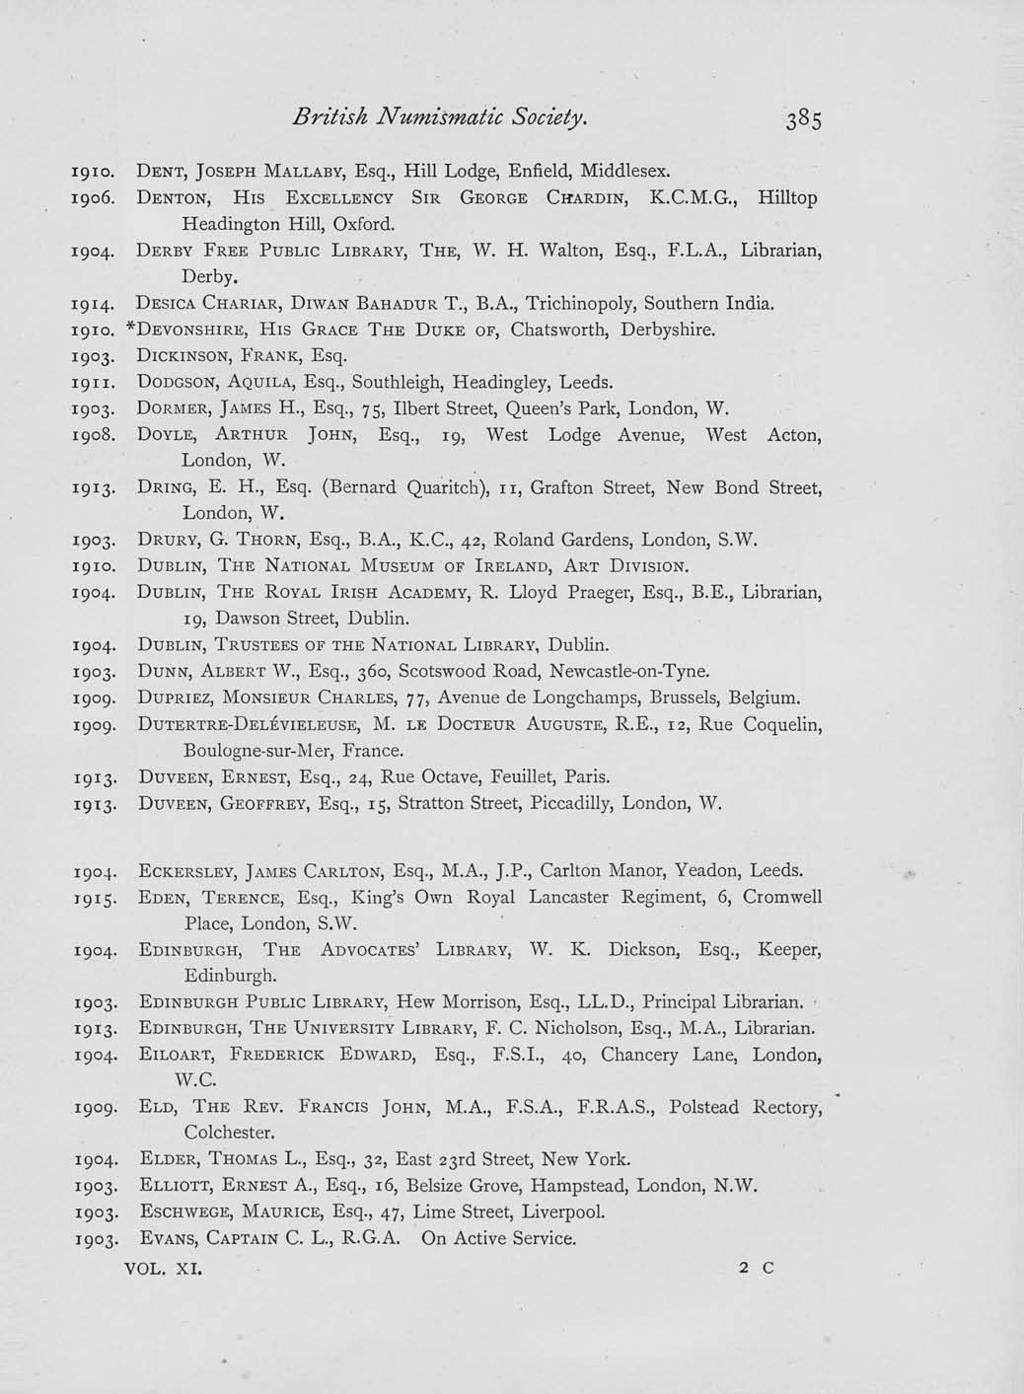 British Numismatic Society. 1910. DENT, JOSEPH MALLABY, Esq., Hill Lodge, Enfield, Middlesex. 1906. DENTON, HIS EXCELLENCY SIR GEORGE CH-ARDIN, K.C.M.G., Hilltop Headington Hill, Oxford. 1904.